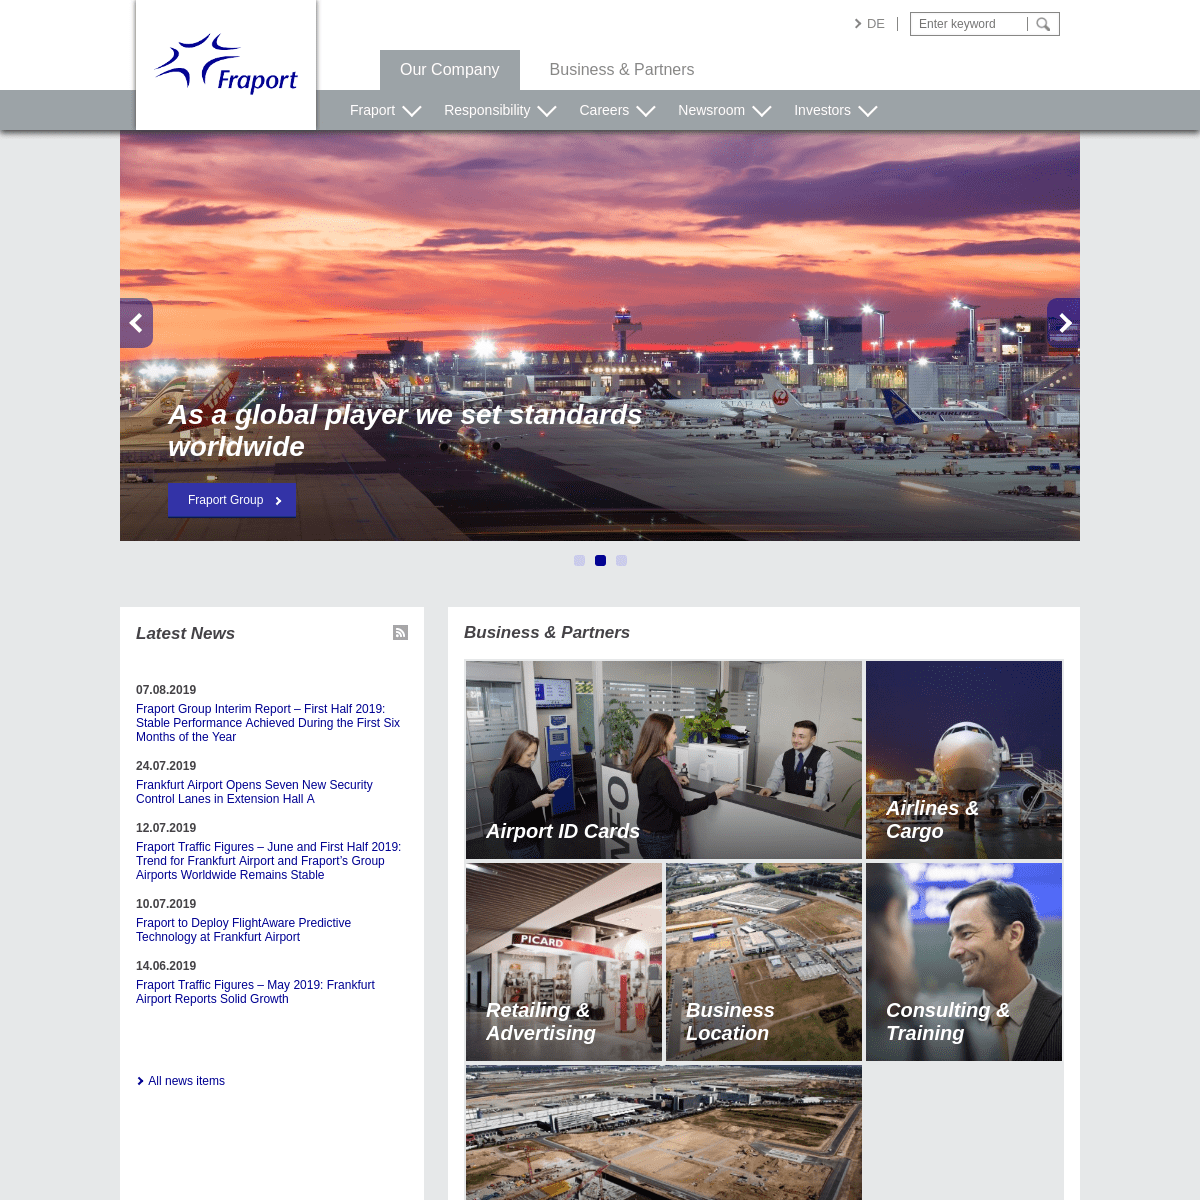 Fraport AG | Our Company